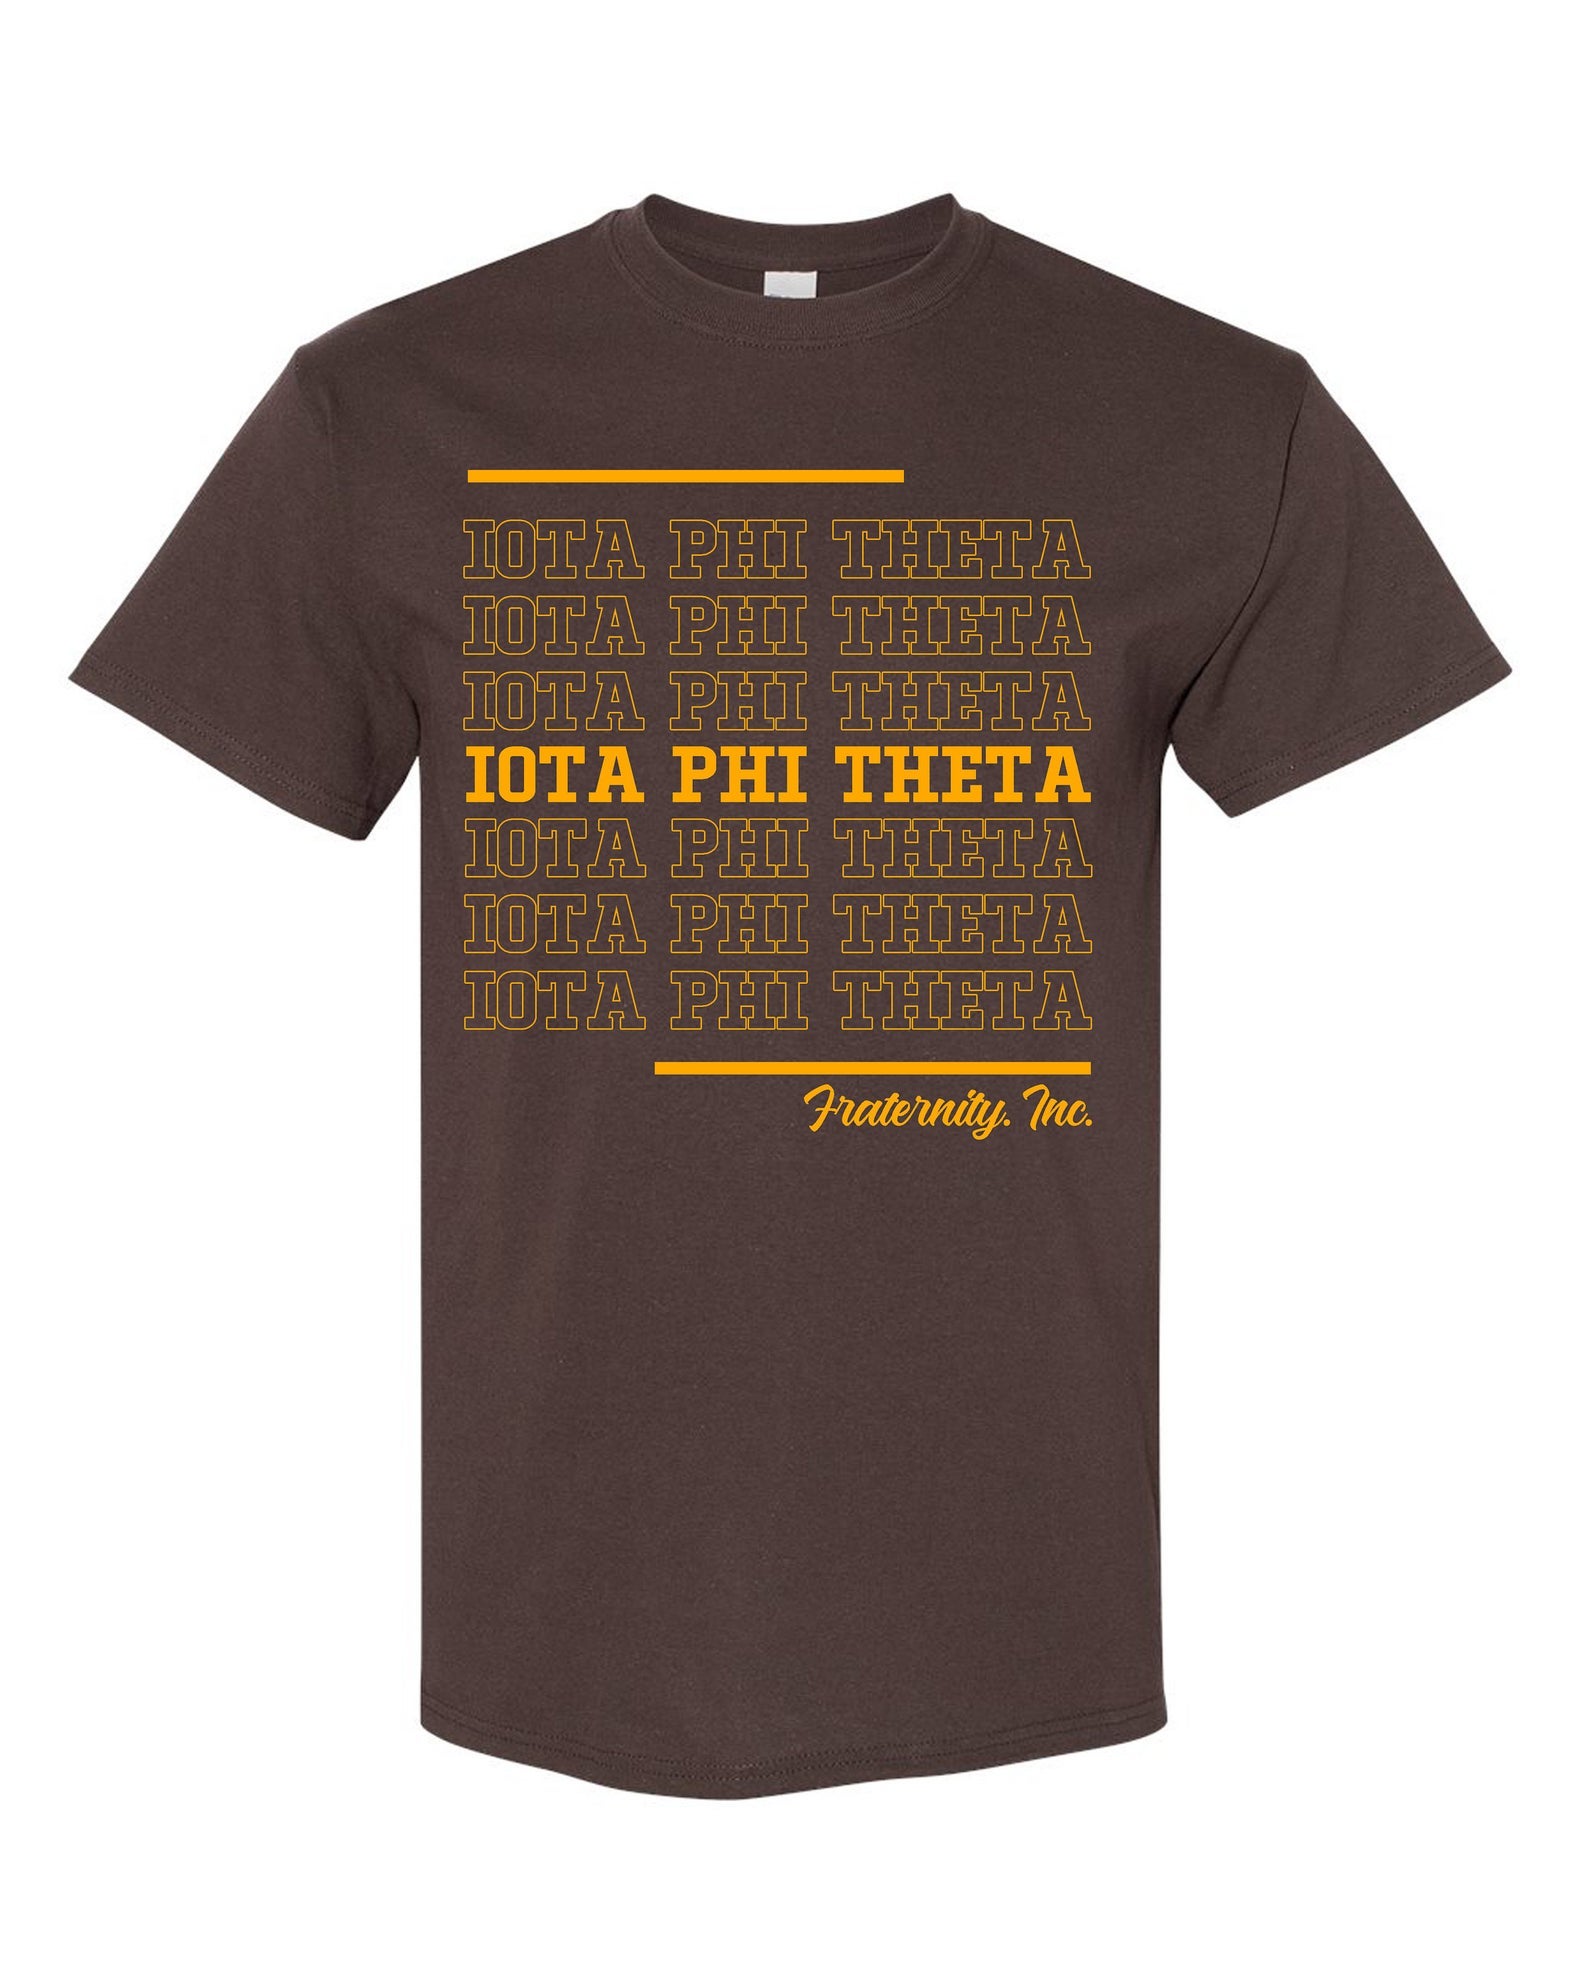 The Ultimate Iota Phi Theta Fraternity, Inc. Homecoming Shopping Guide